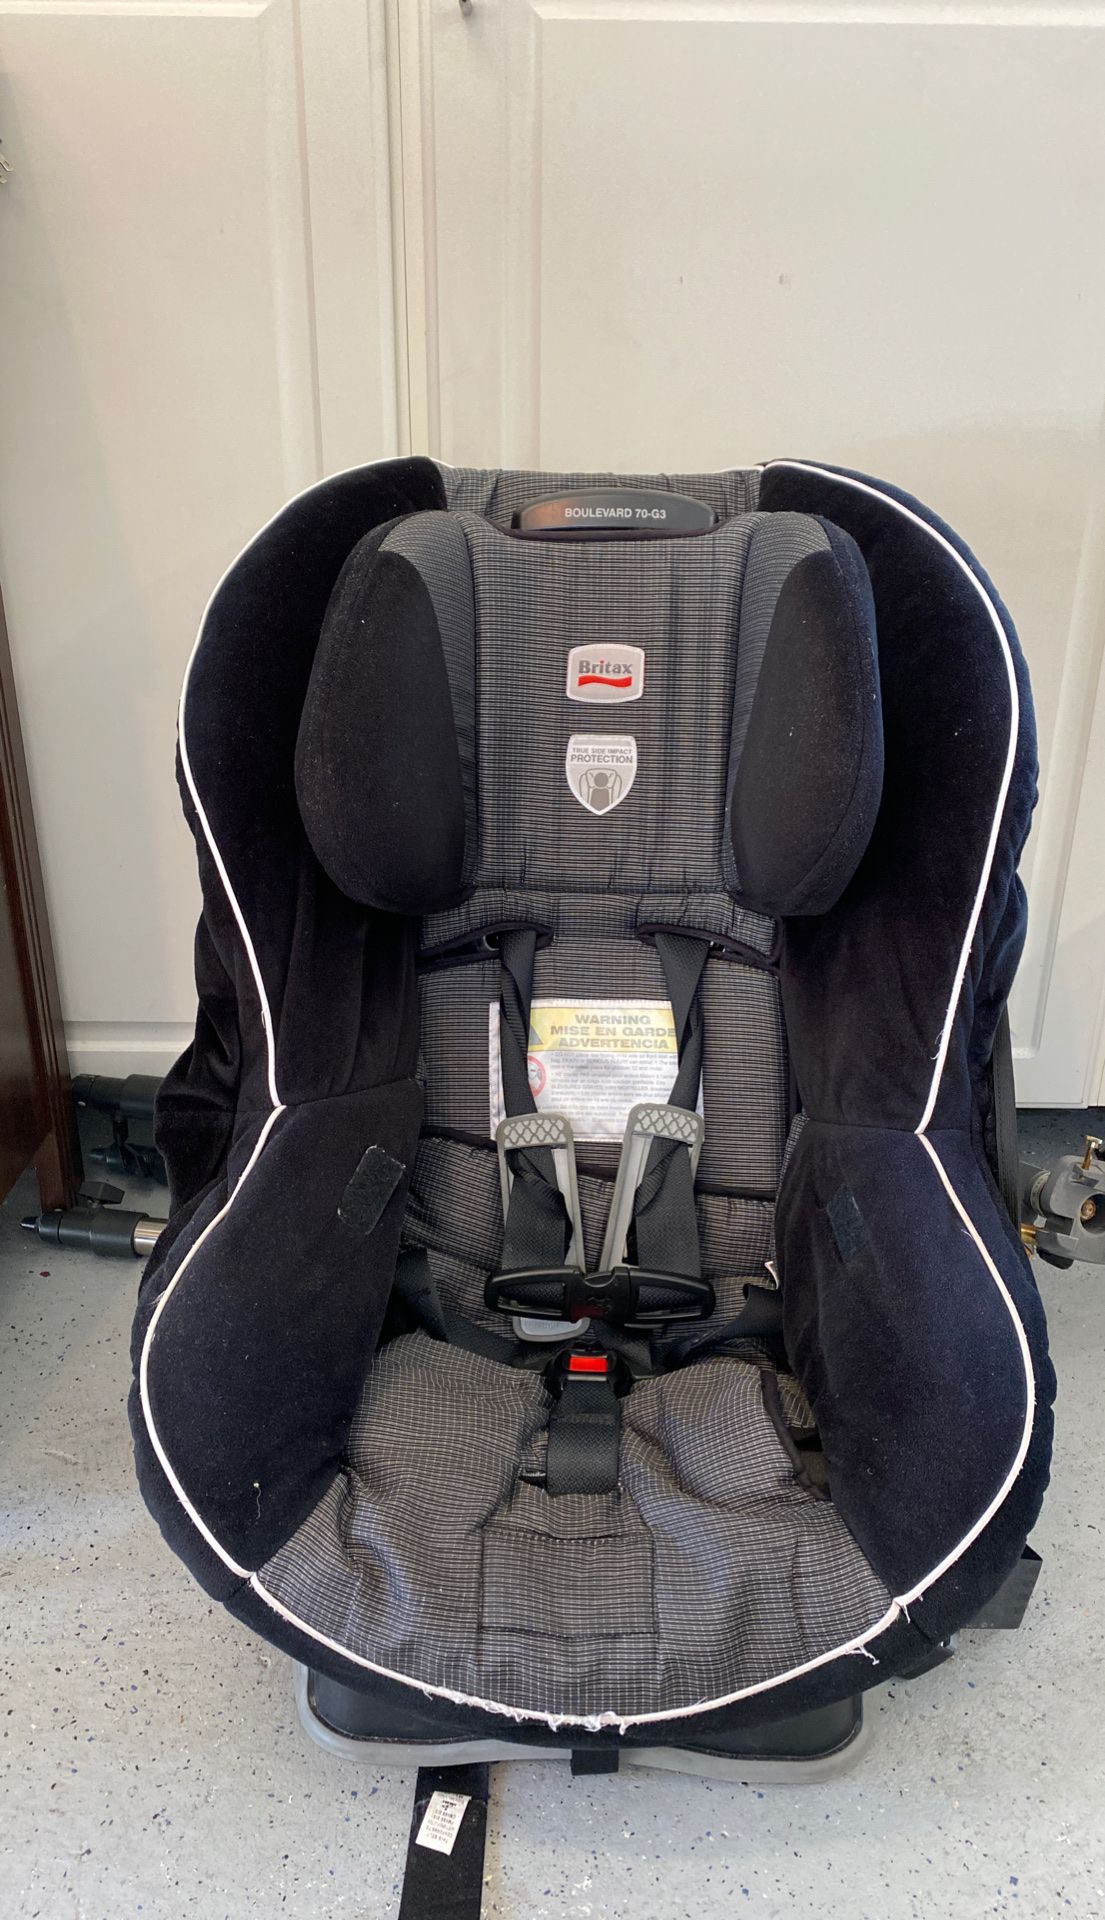 Britax - toddler car seat $25 or best offer